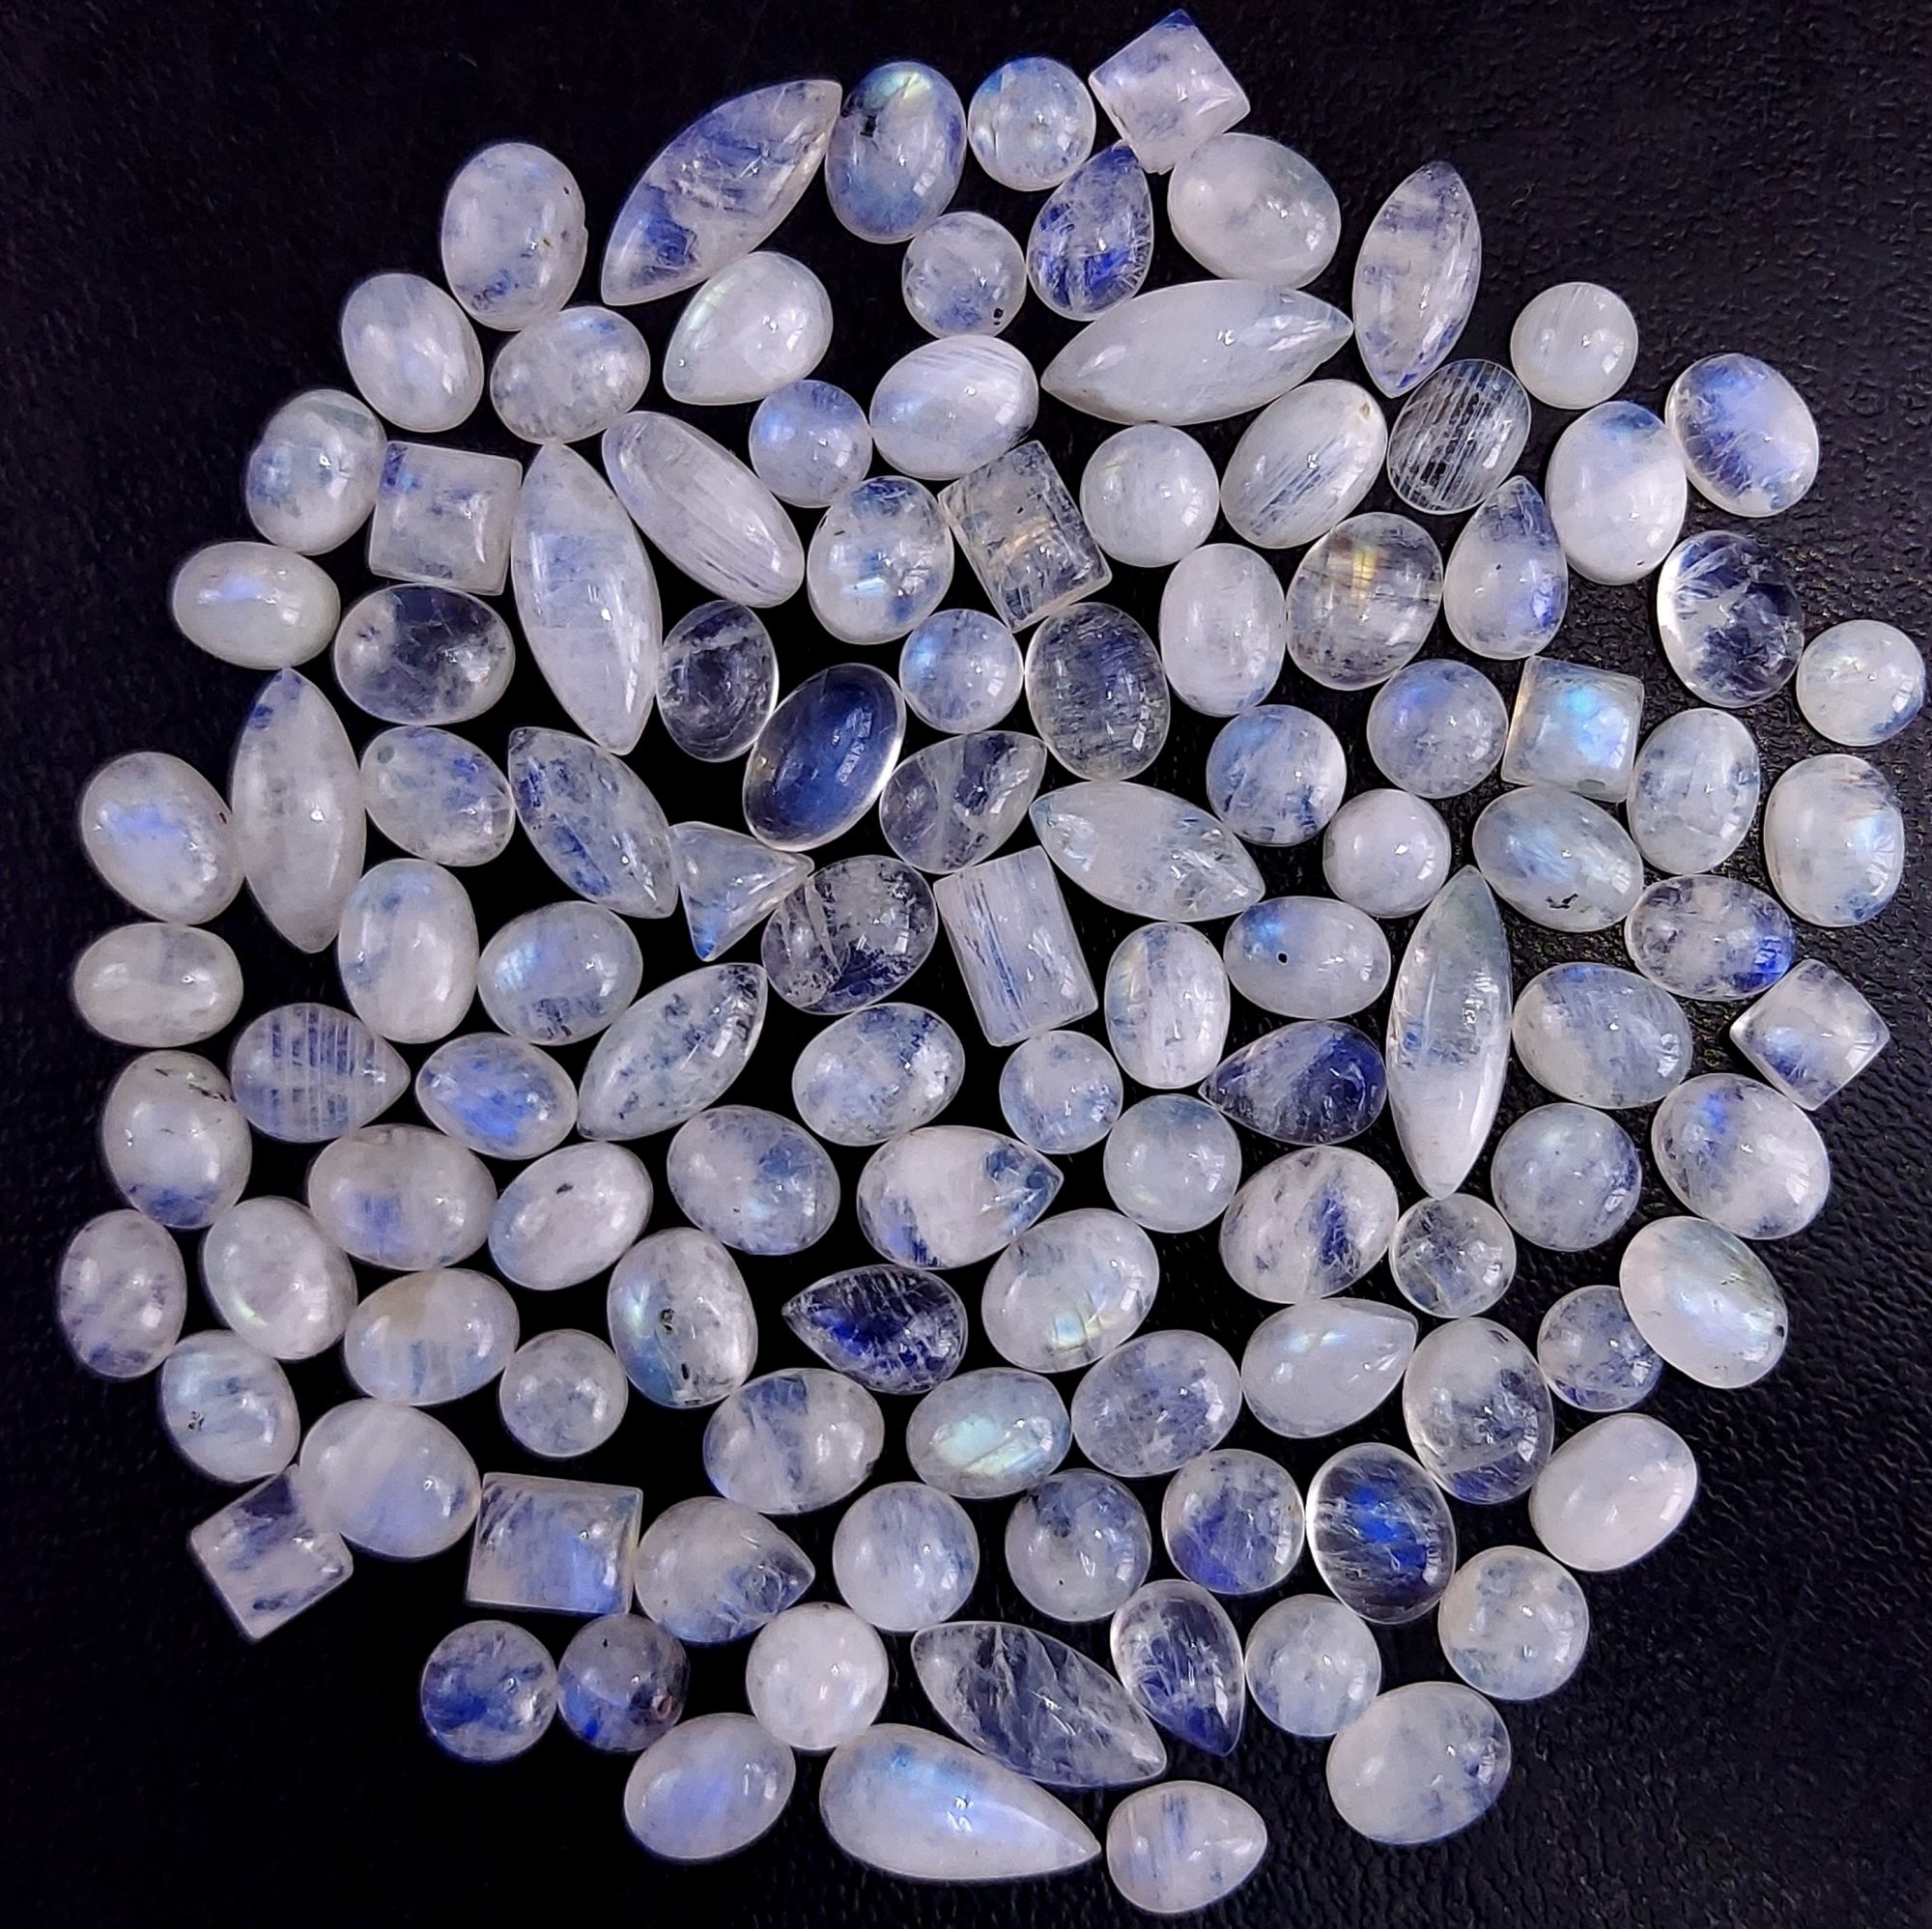 114Pcs 202Cts  Natural Rainbow Cabochon Gemstone For Jewelry Making Crystal Cabochon Semi-Precious Rainbow Moonstone Flat Back Gemstone Lot 13x4 4x4mm#772